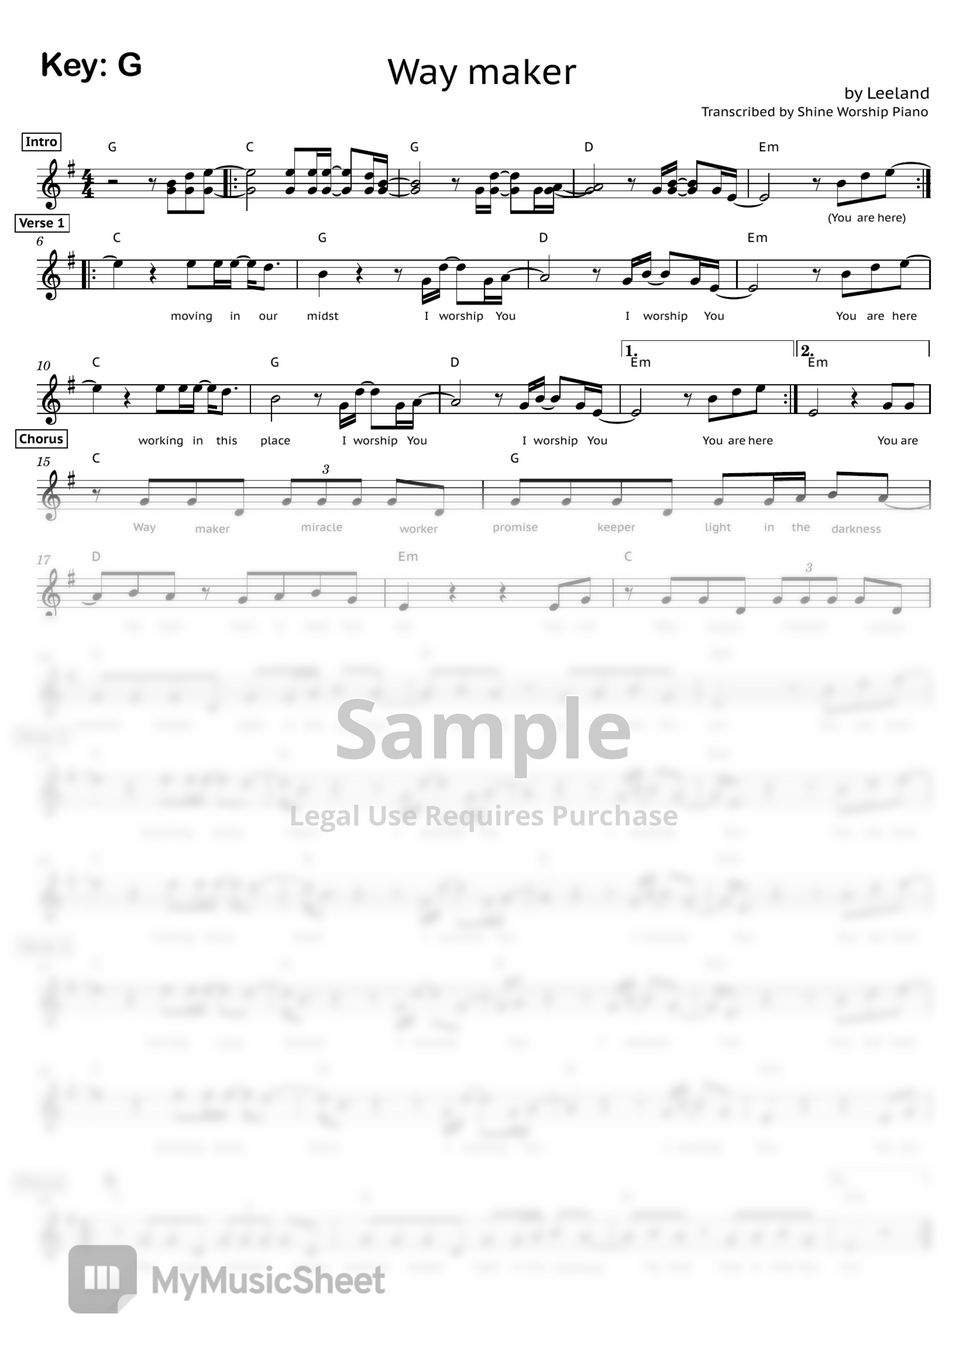 Sinach - Way maker (by Leeeland) Sheets by Shine Worship Piano